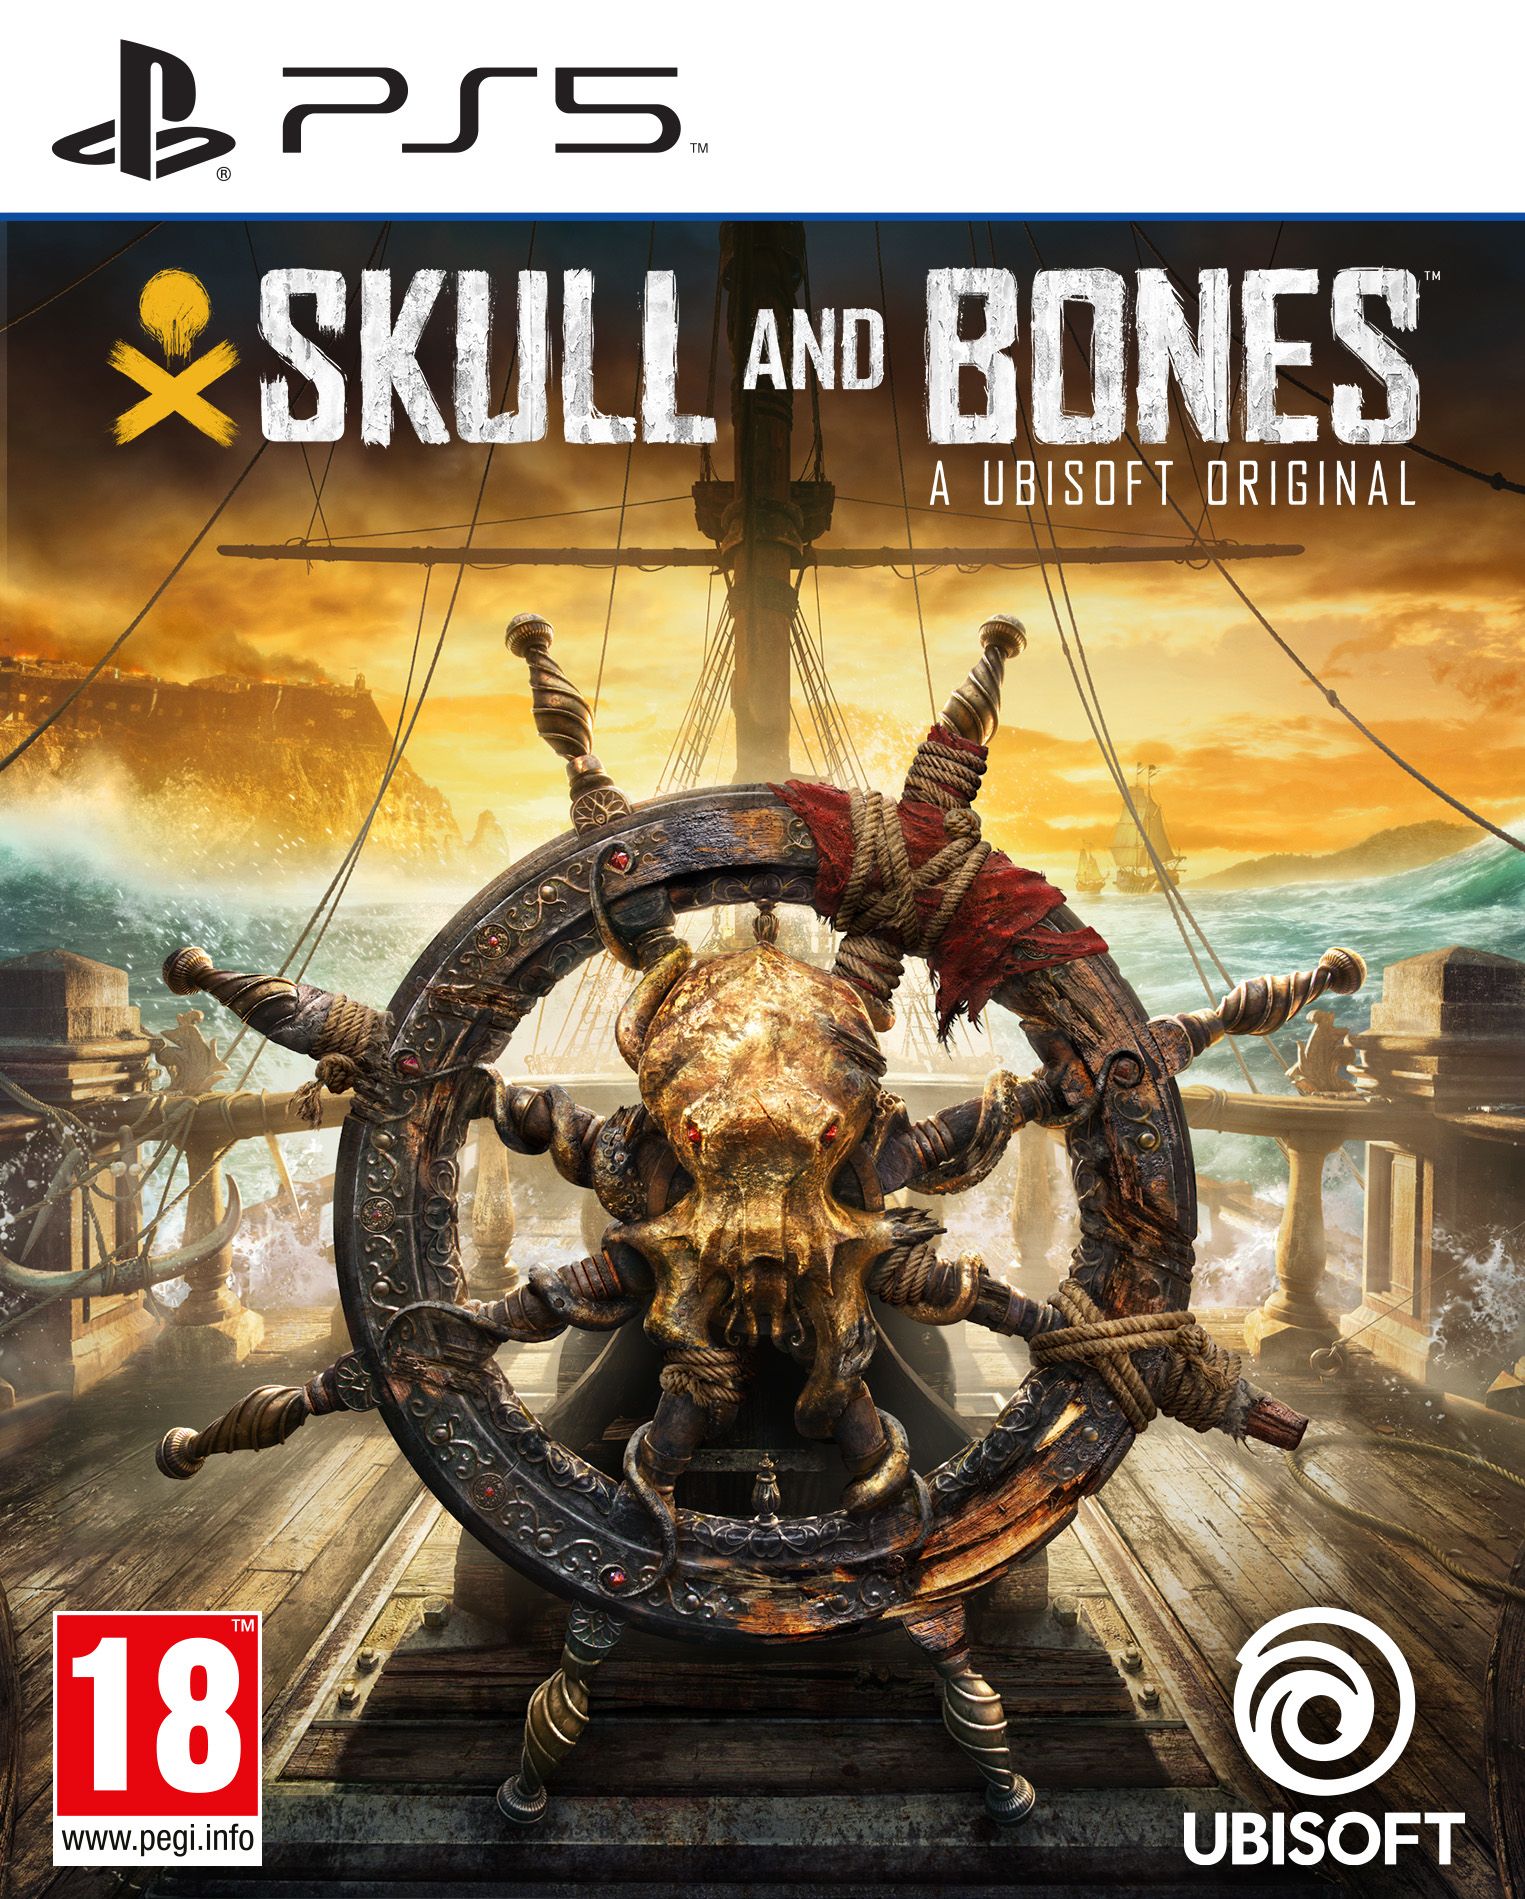 PS5 Skull and Bones - Disponibilità immediata Ubisoft